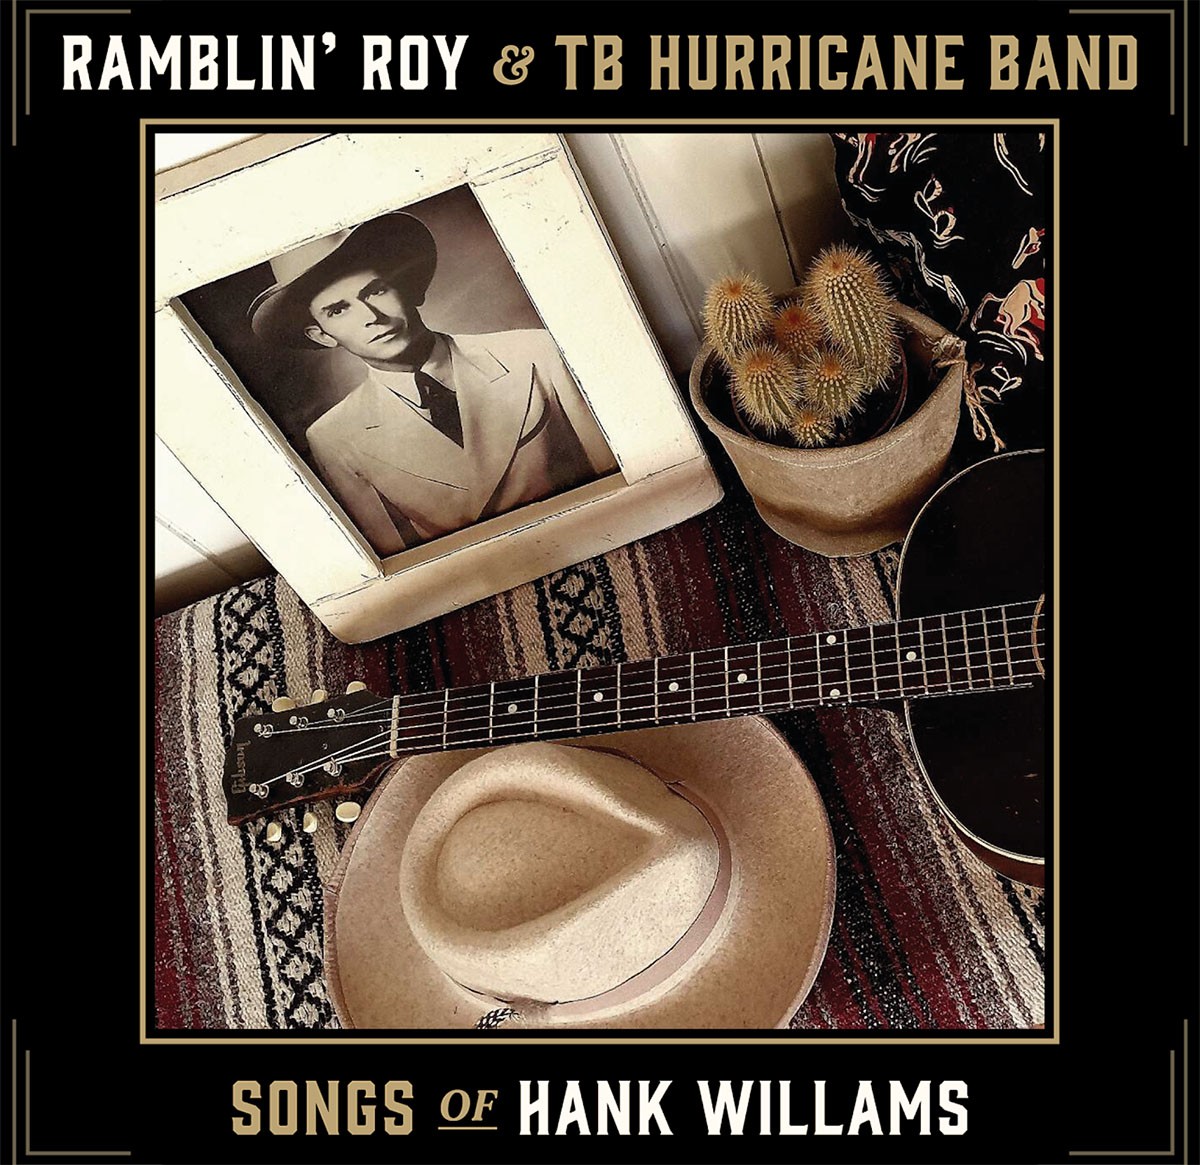 Ramblin’ Roy & T B Hurricane Band – Songs of Hank Williams